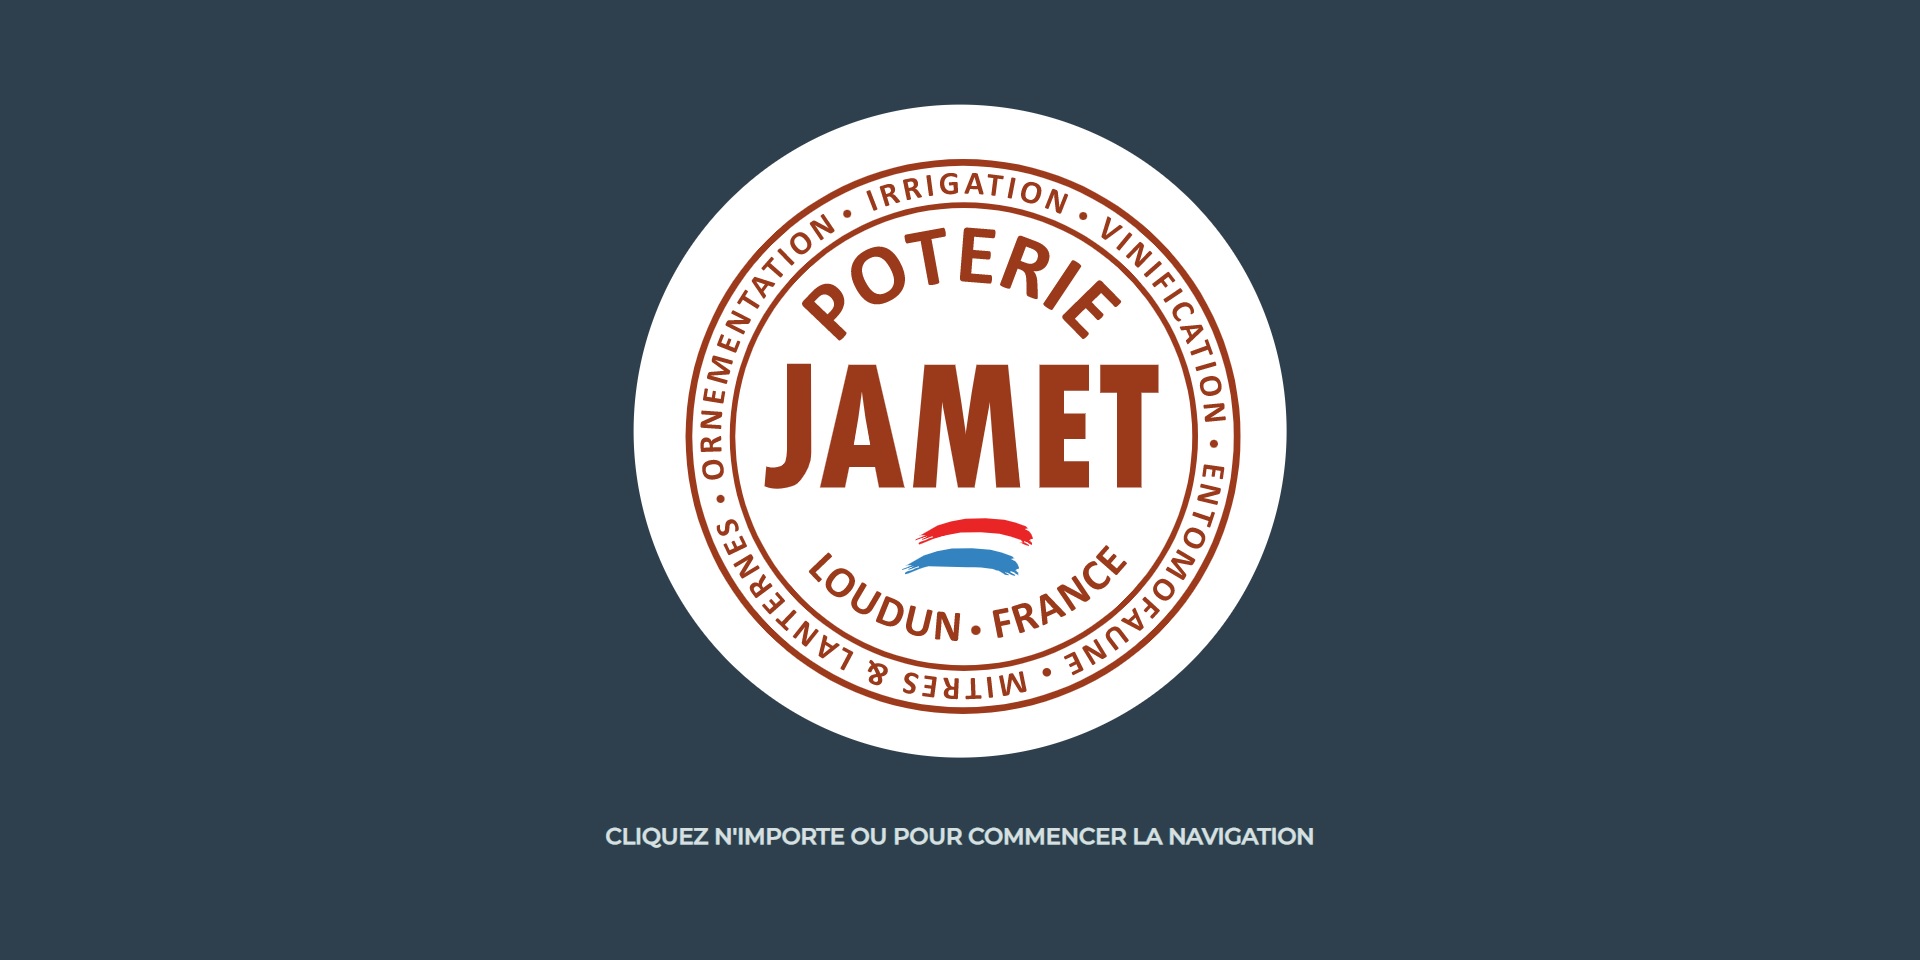 Homepage of poterie jamet website